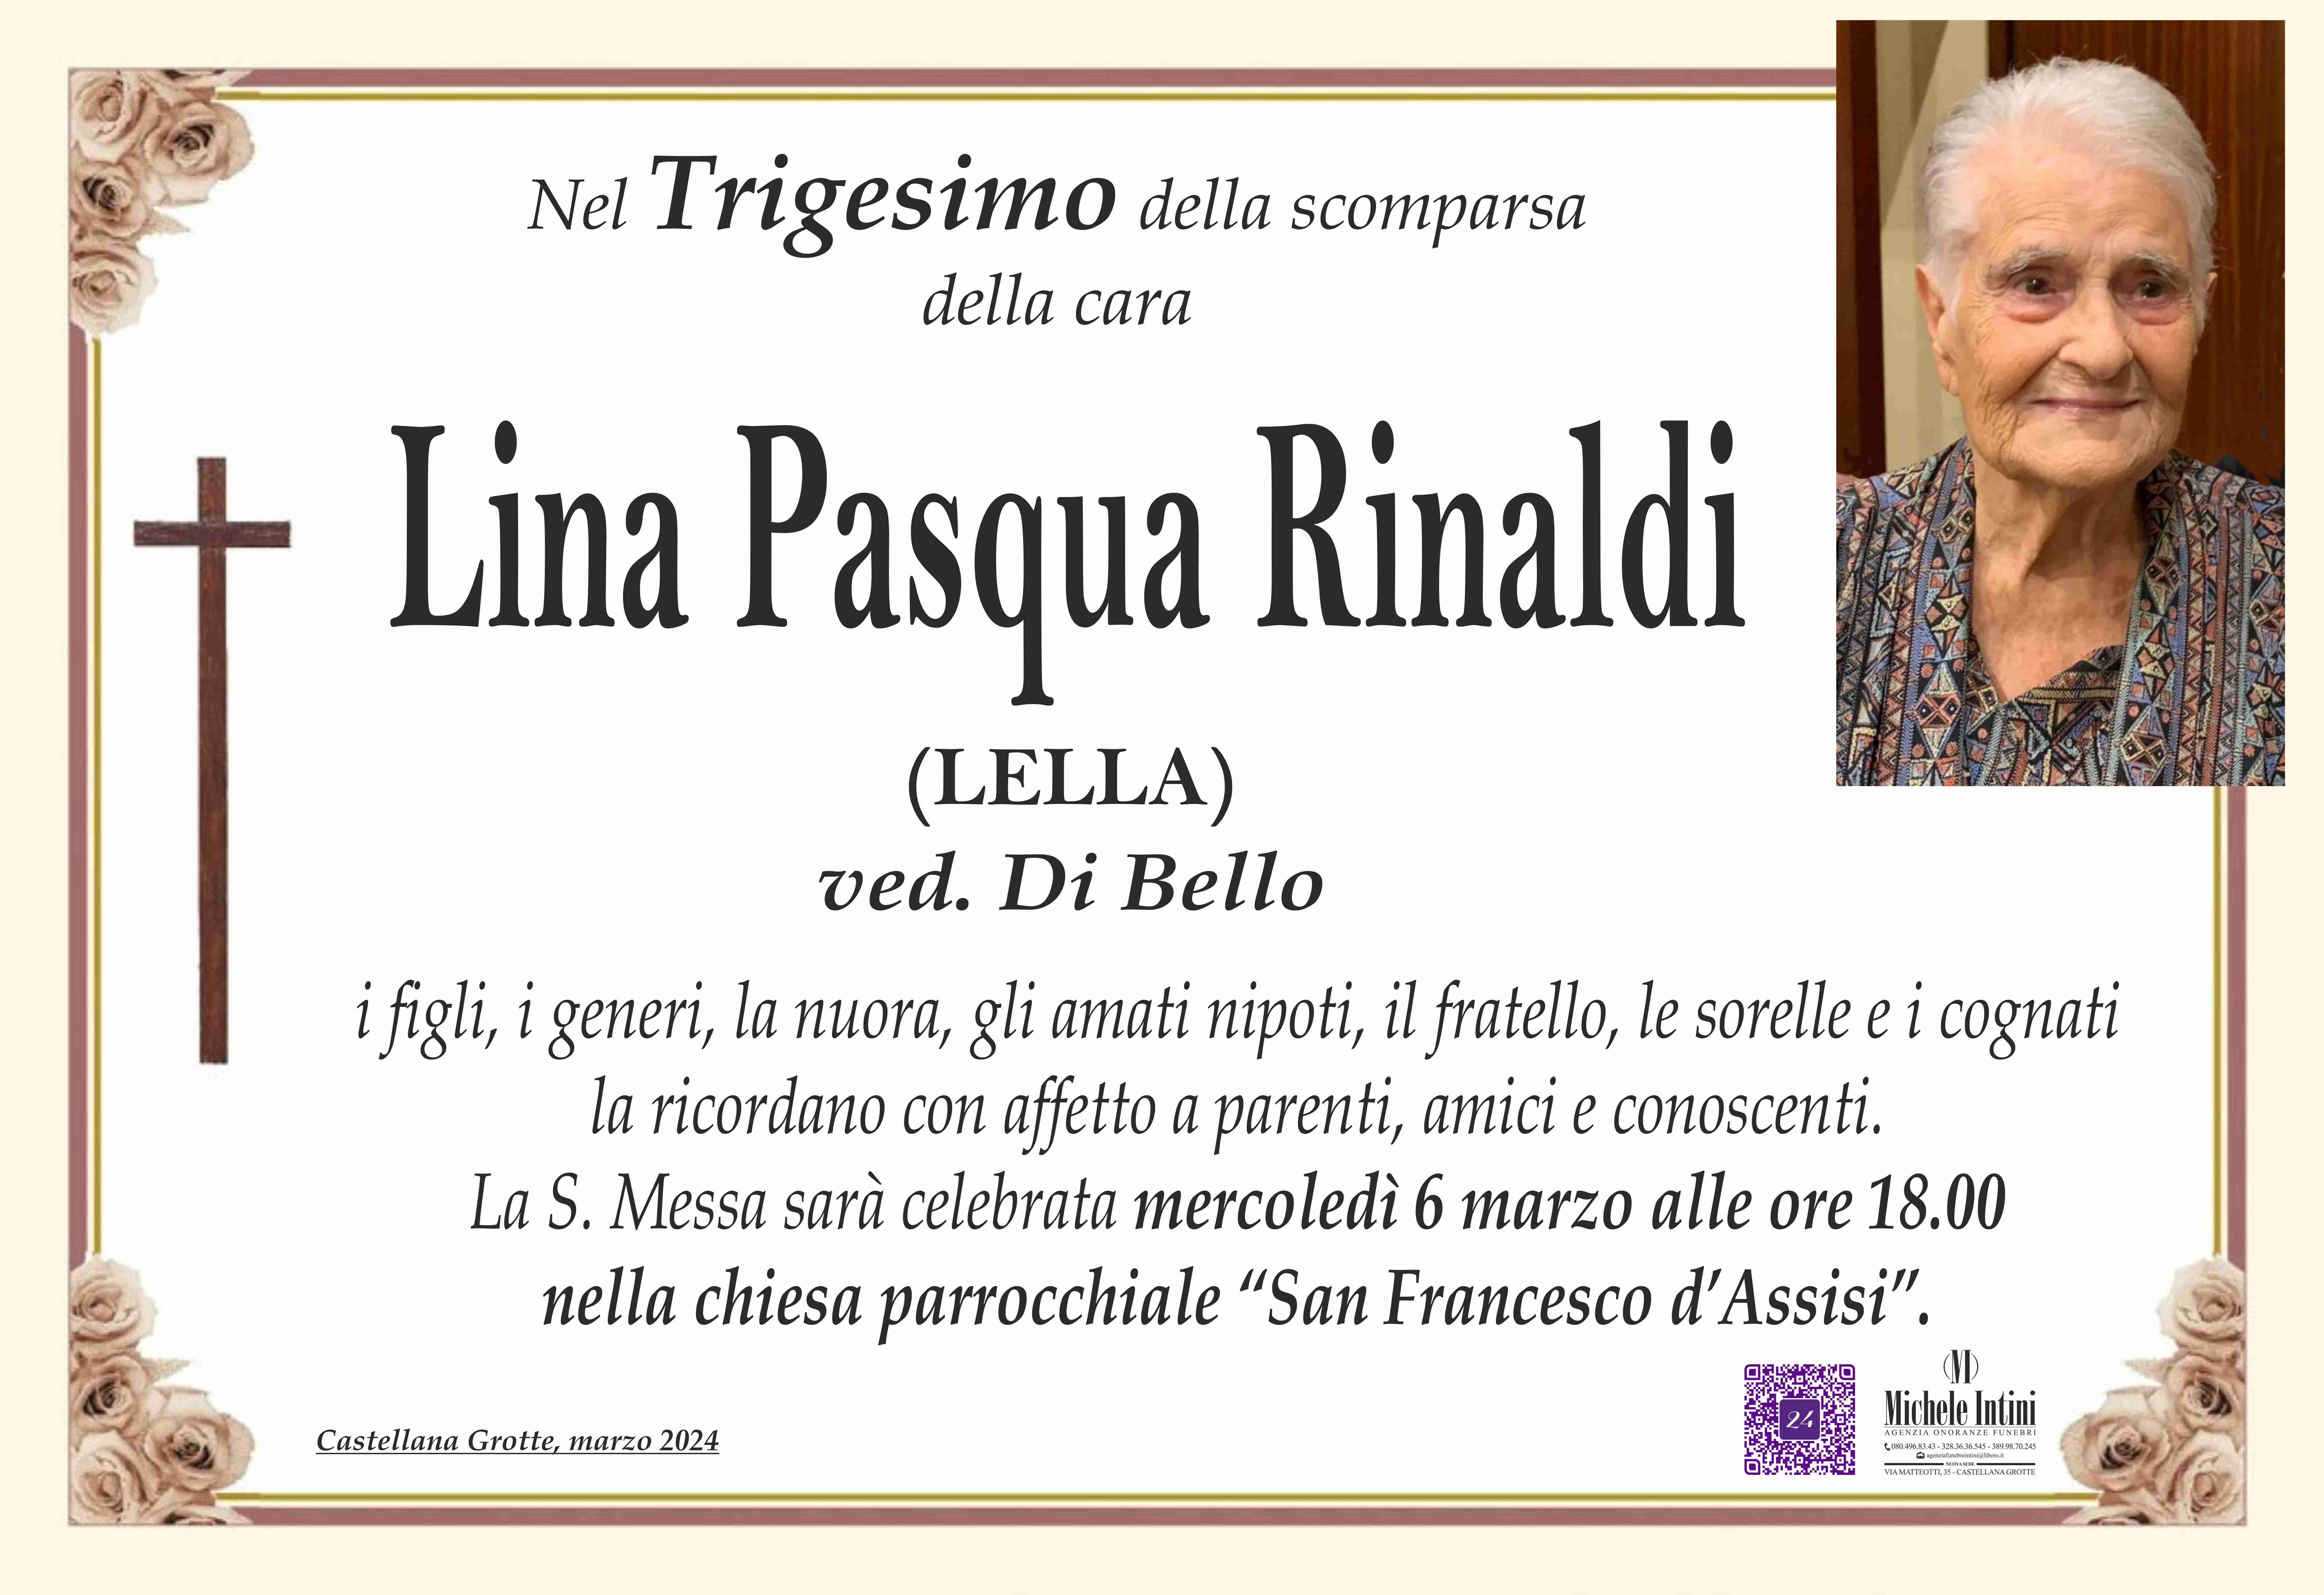 Lina Pasqua Rinaldi